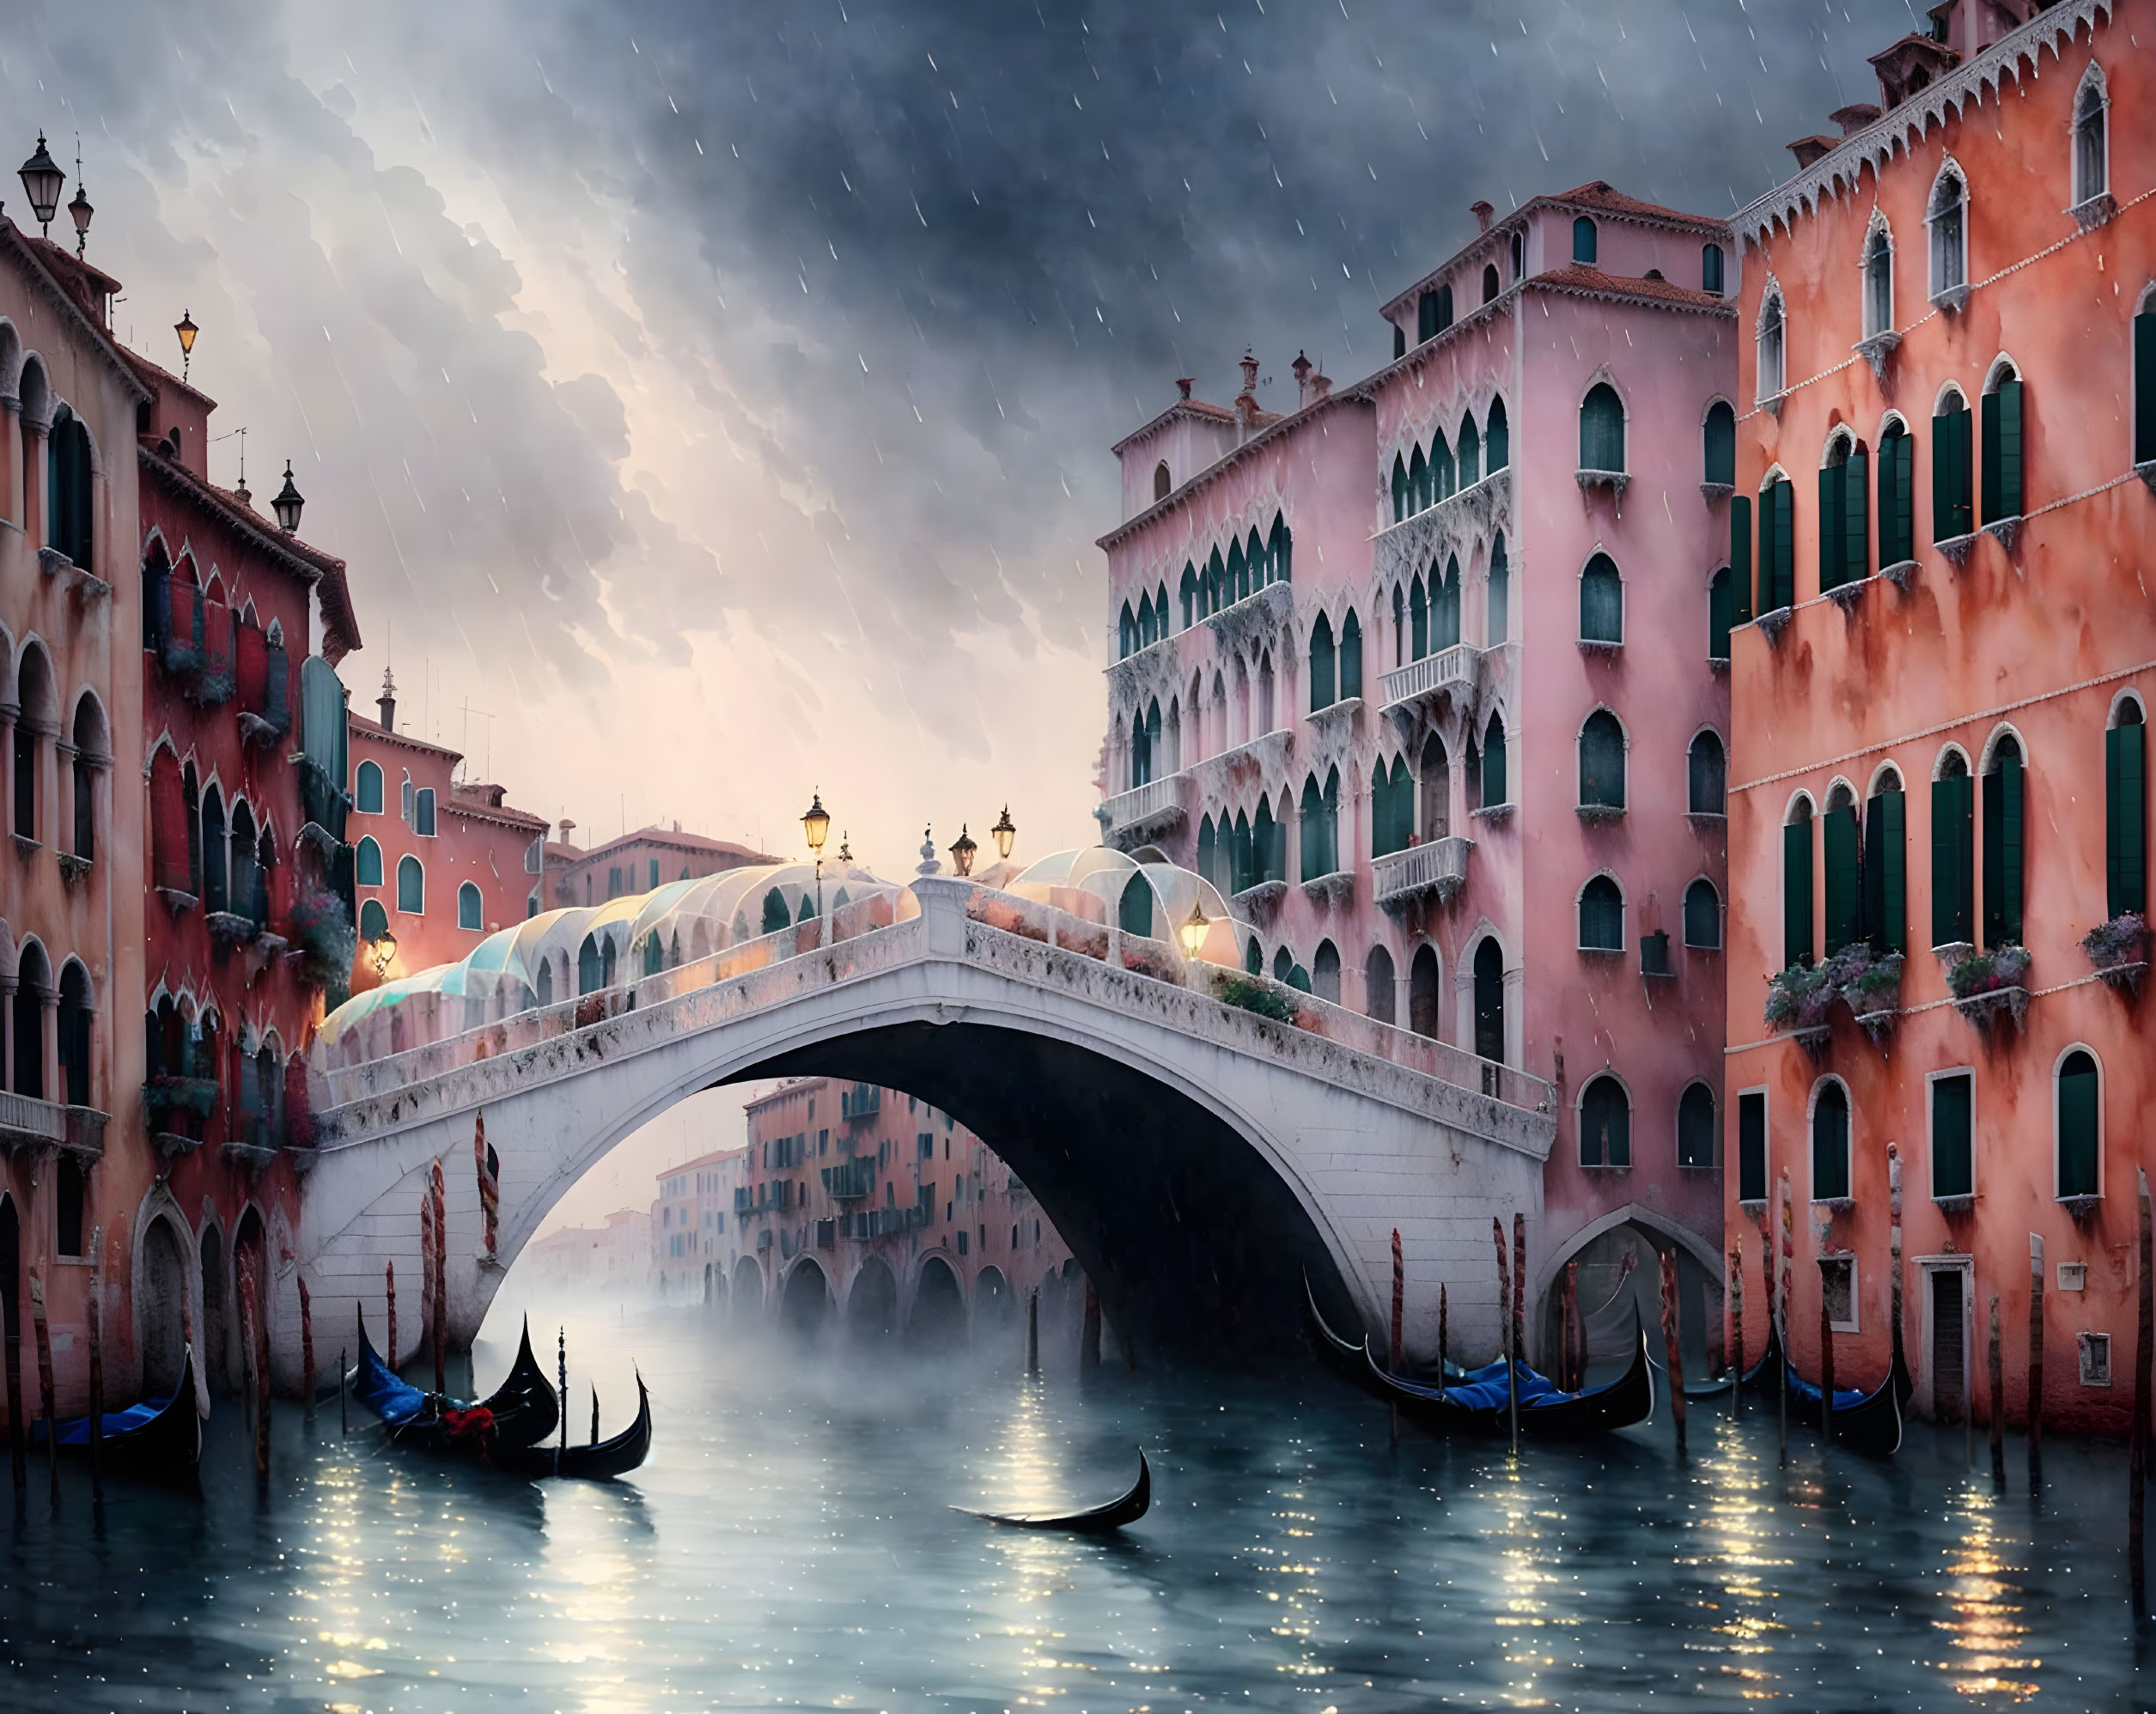 Venice landscape with gondolas, bridge, historic buildings, and stormy sky